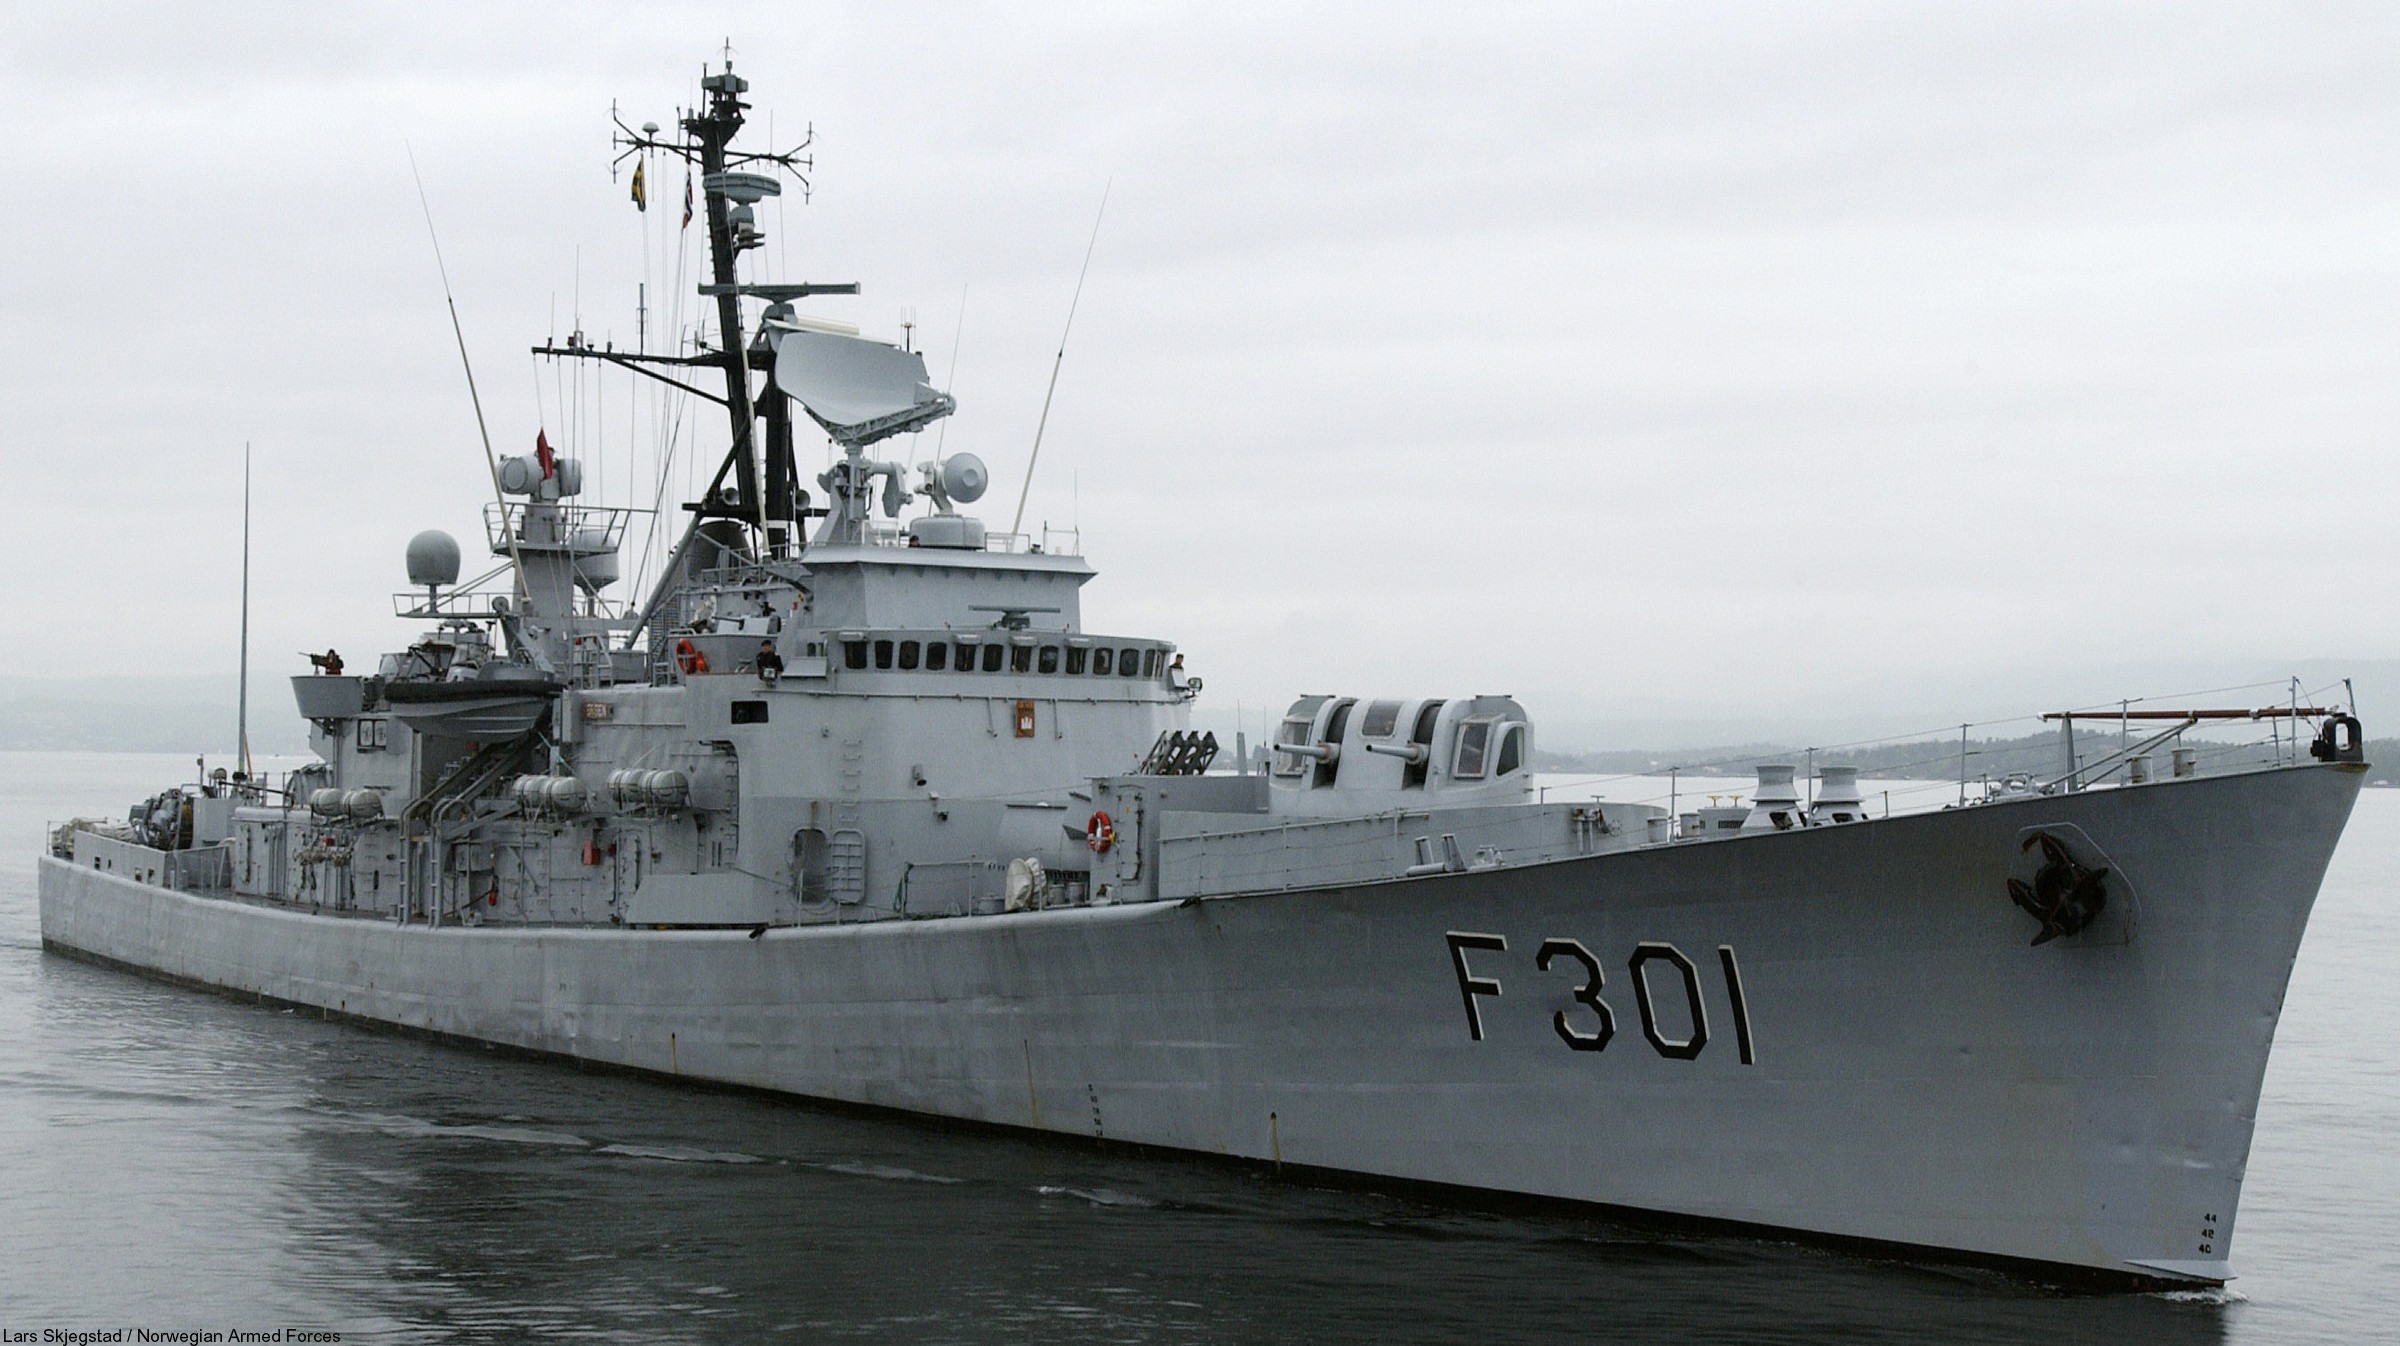 f-301 hnoms knm bergen oslo class frigate royal norwegian navy sjoforsvaret 02c